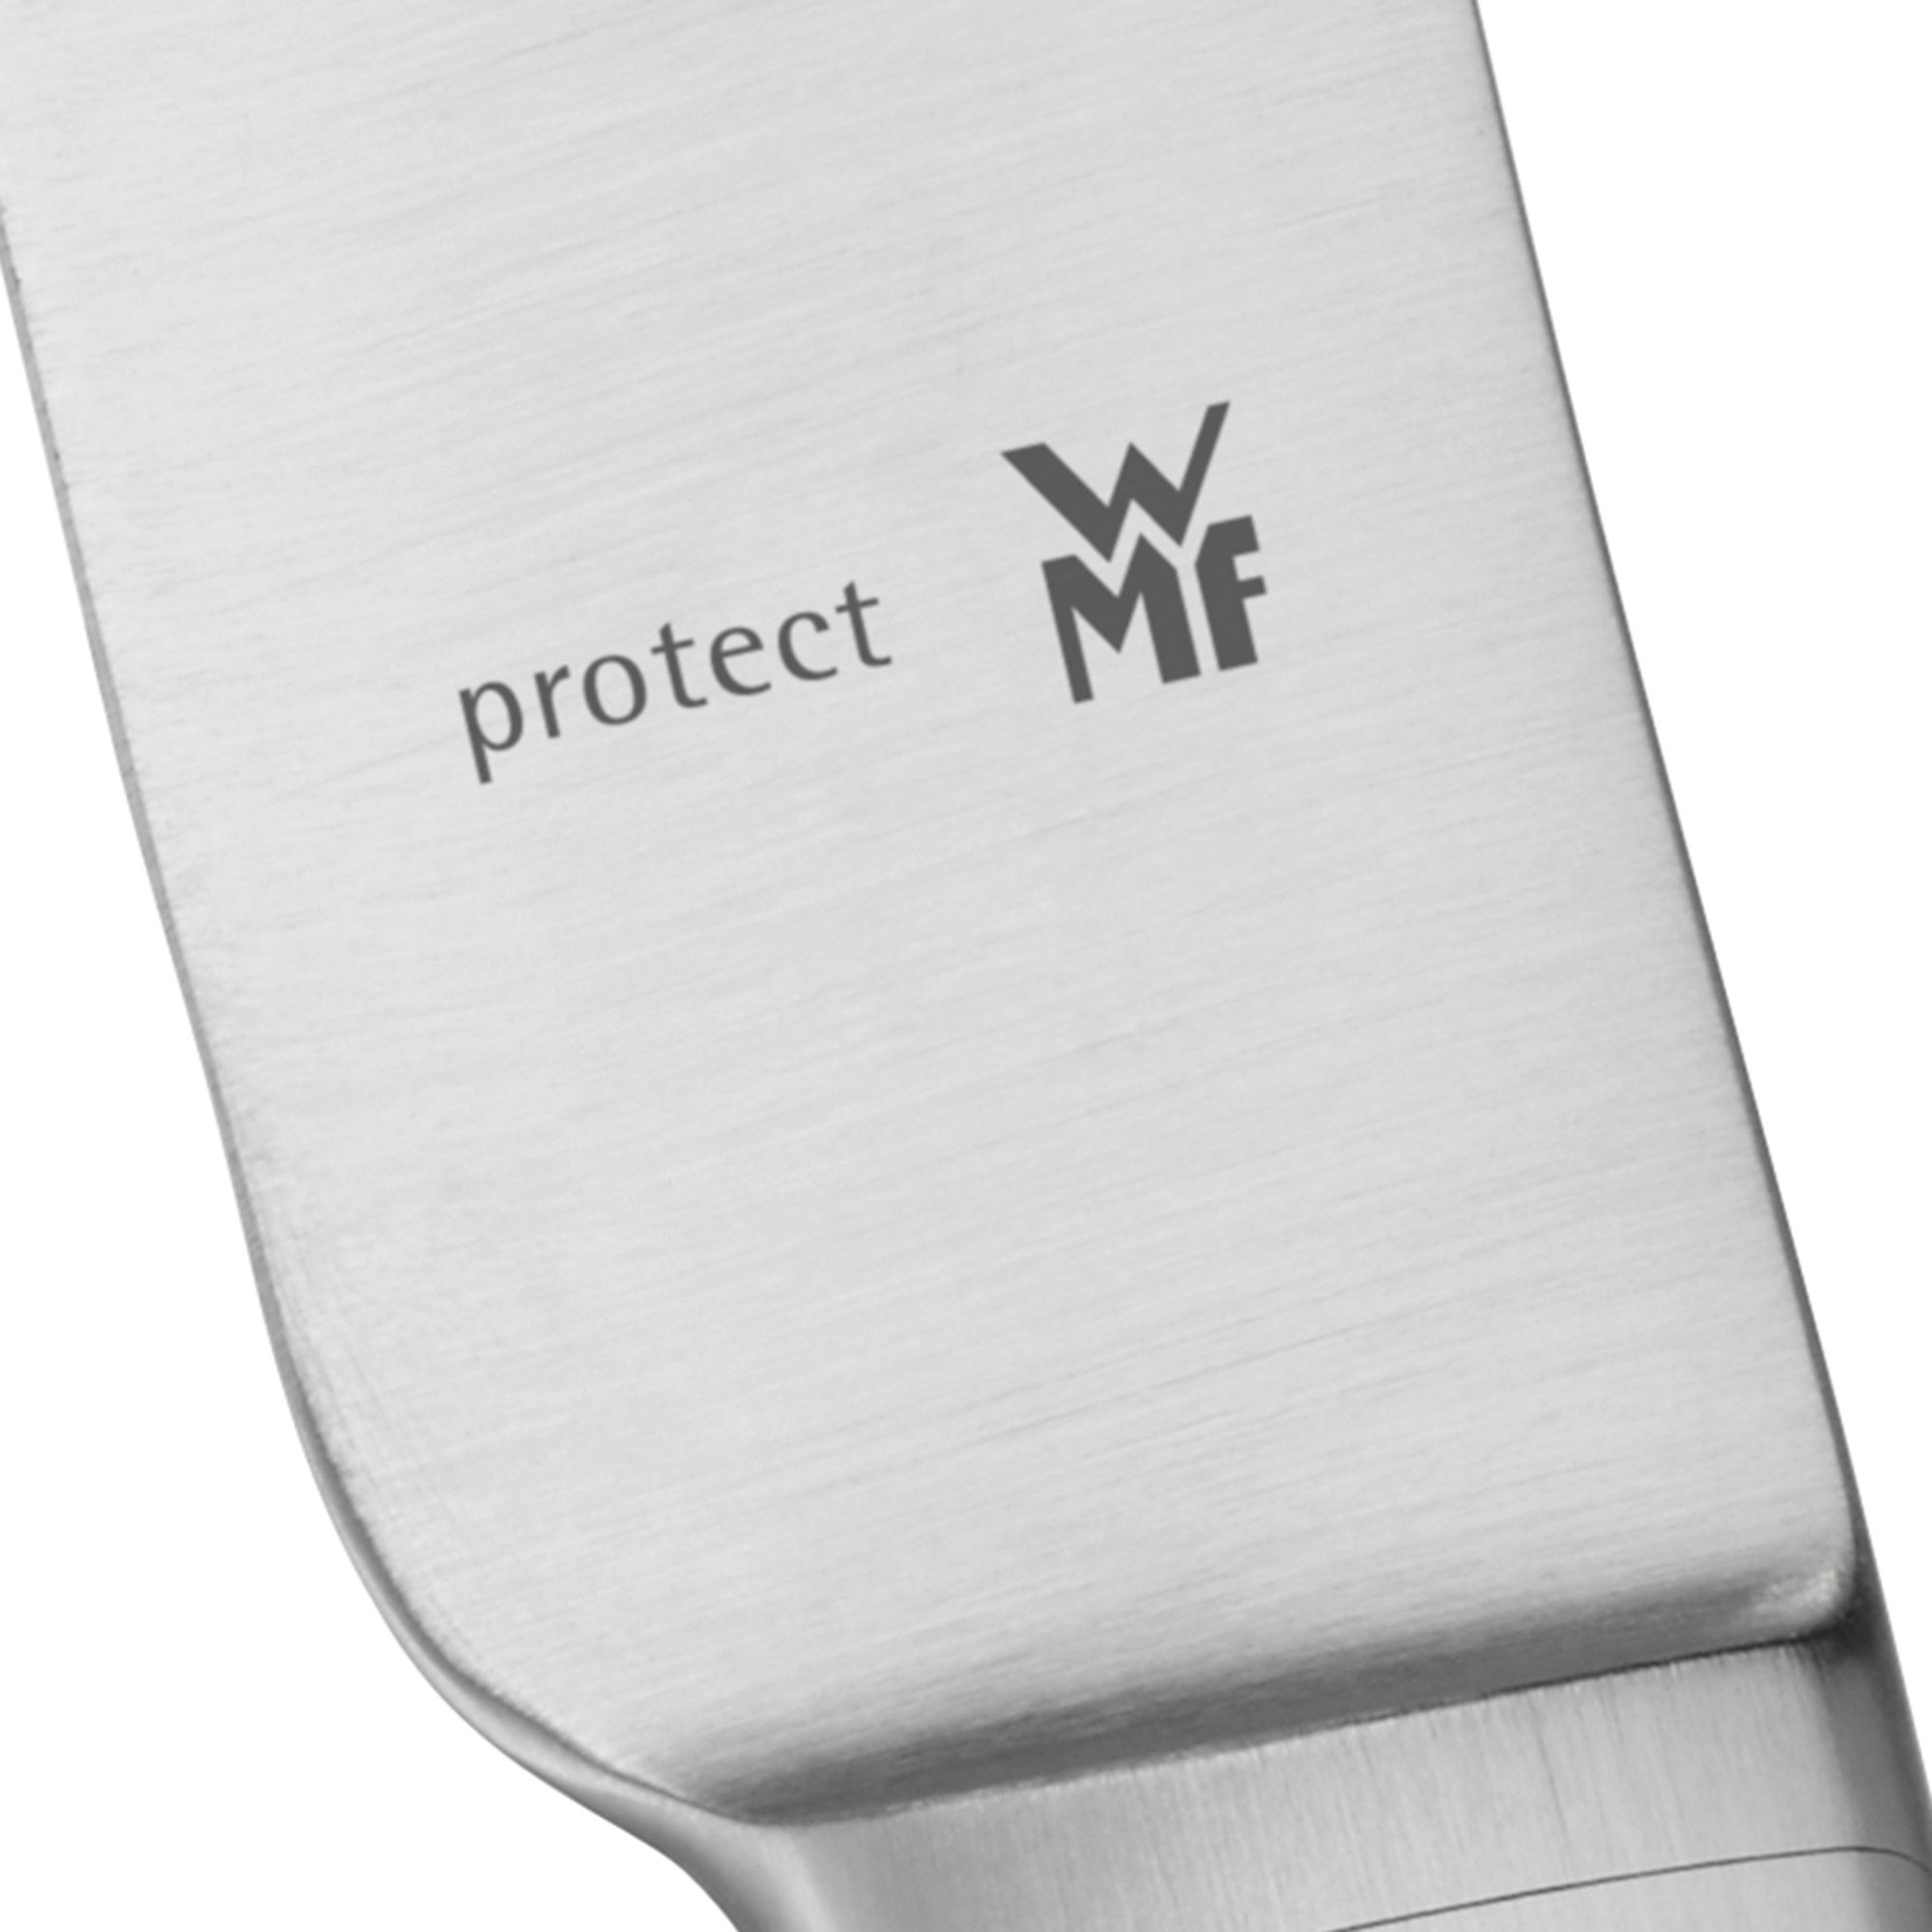 Tafelmesser WMF protect Cromargan kratzbeständig, Edelstahl poliert, (1 Kult spülmaschinenfest Stück),